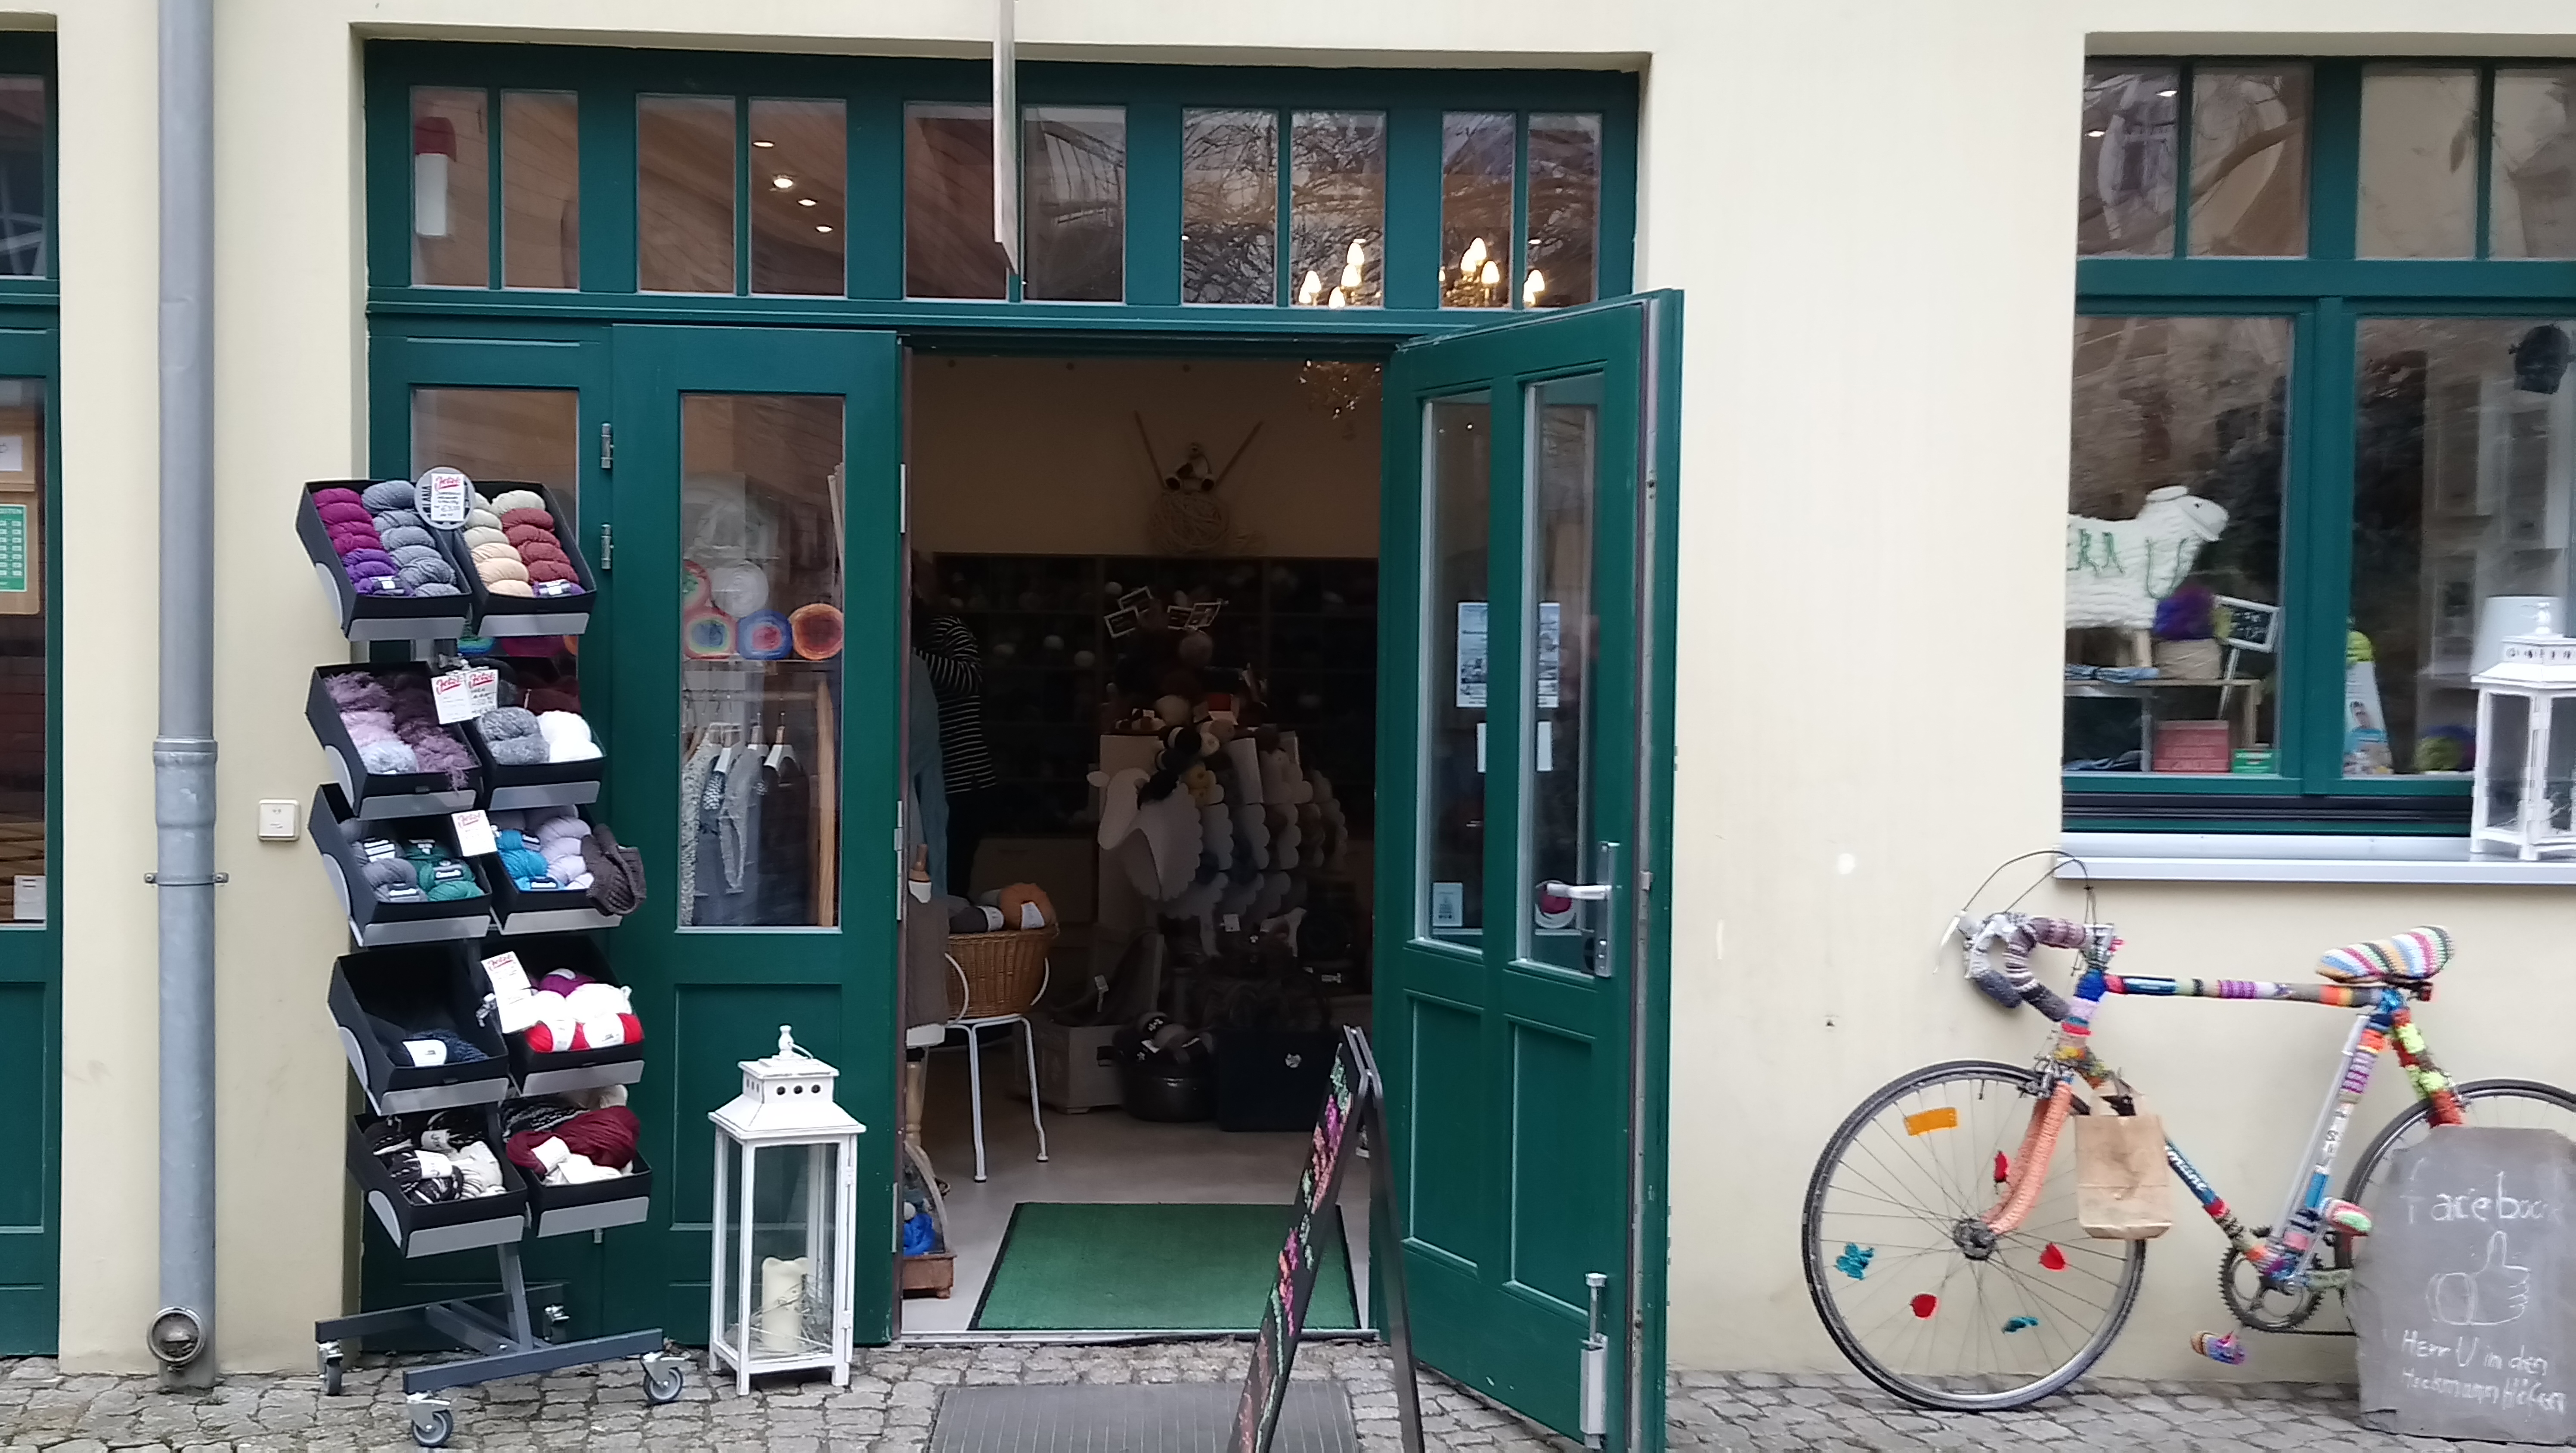 Herr U shop entrance, Berlin, photo by Amanda Jane Textiles.JPG